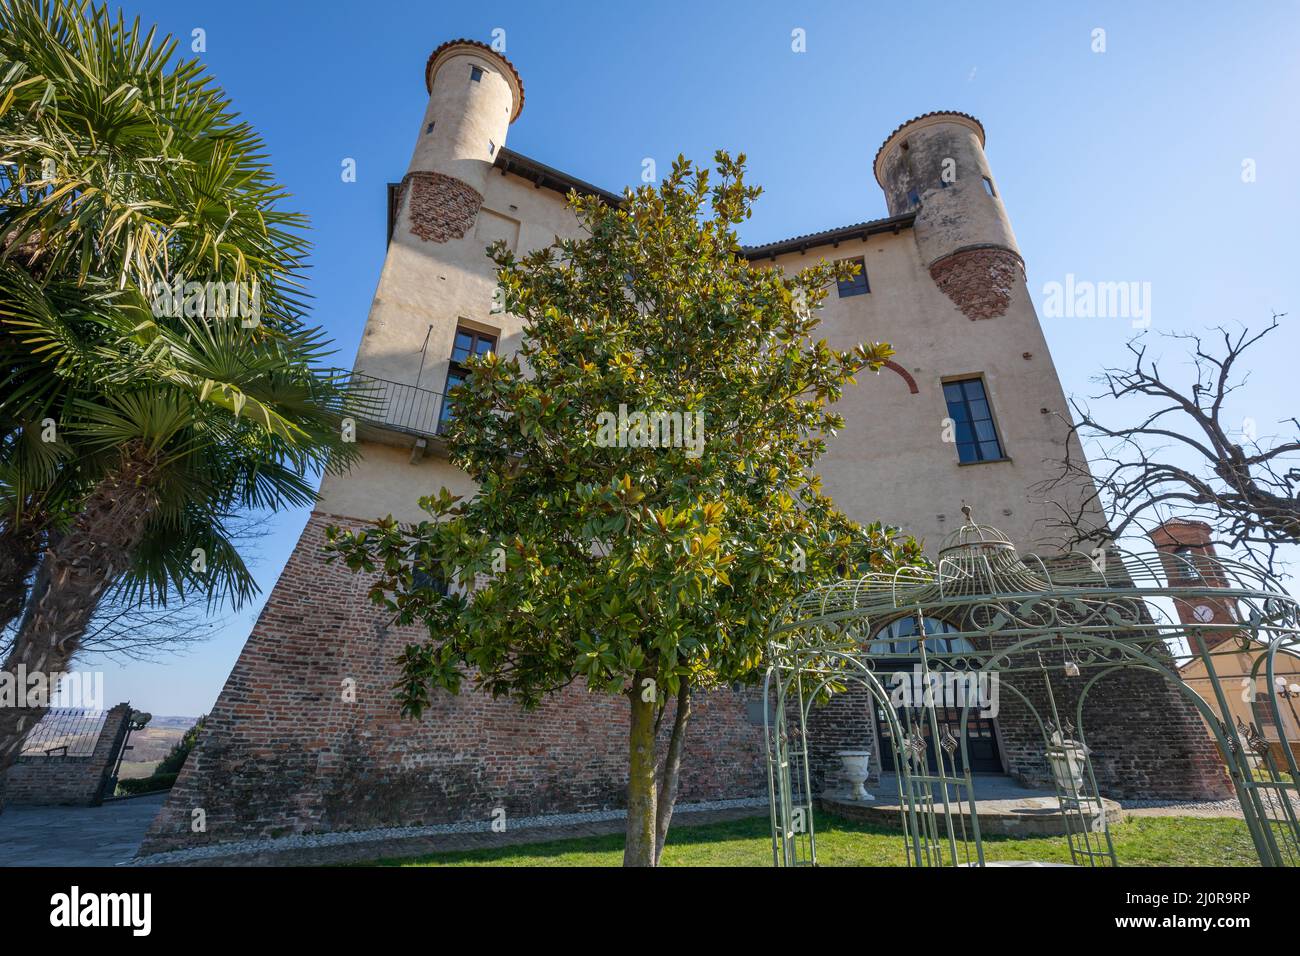 Castle of Cortanze, Piemonte, Italy Stock Photo